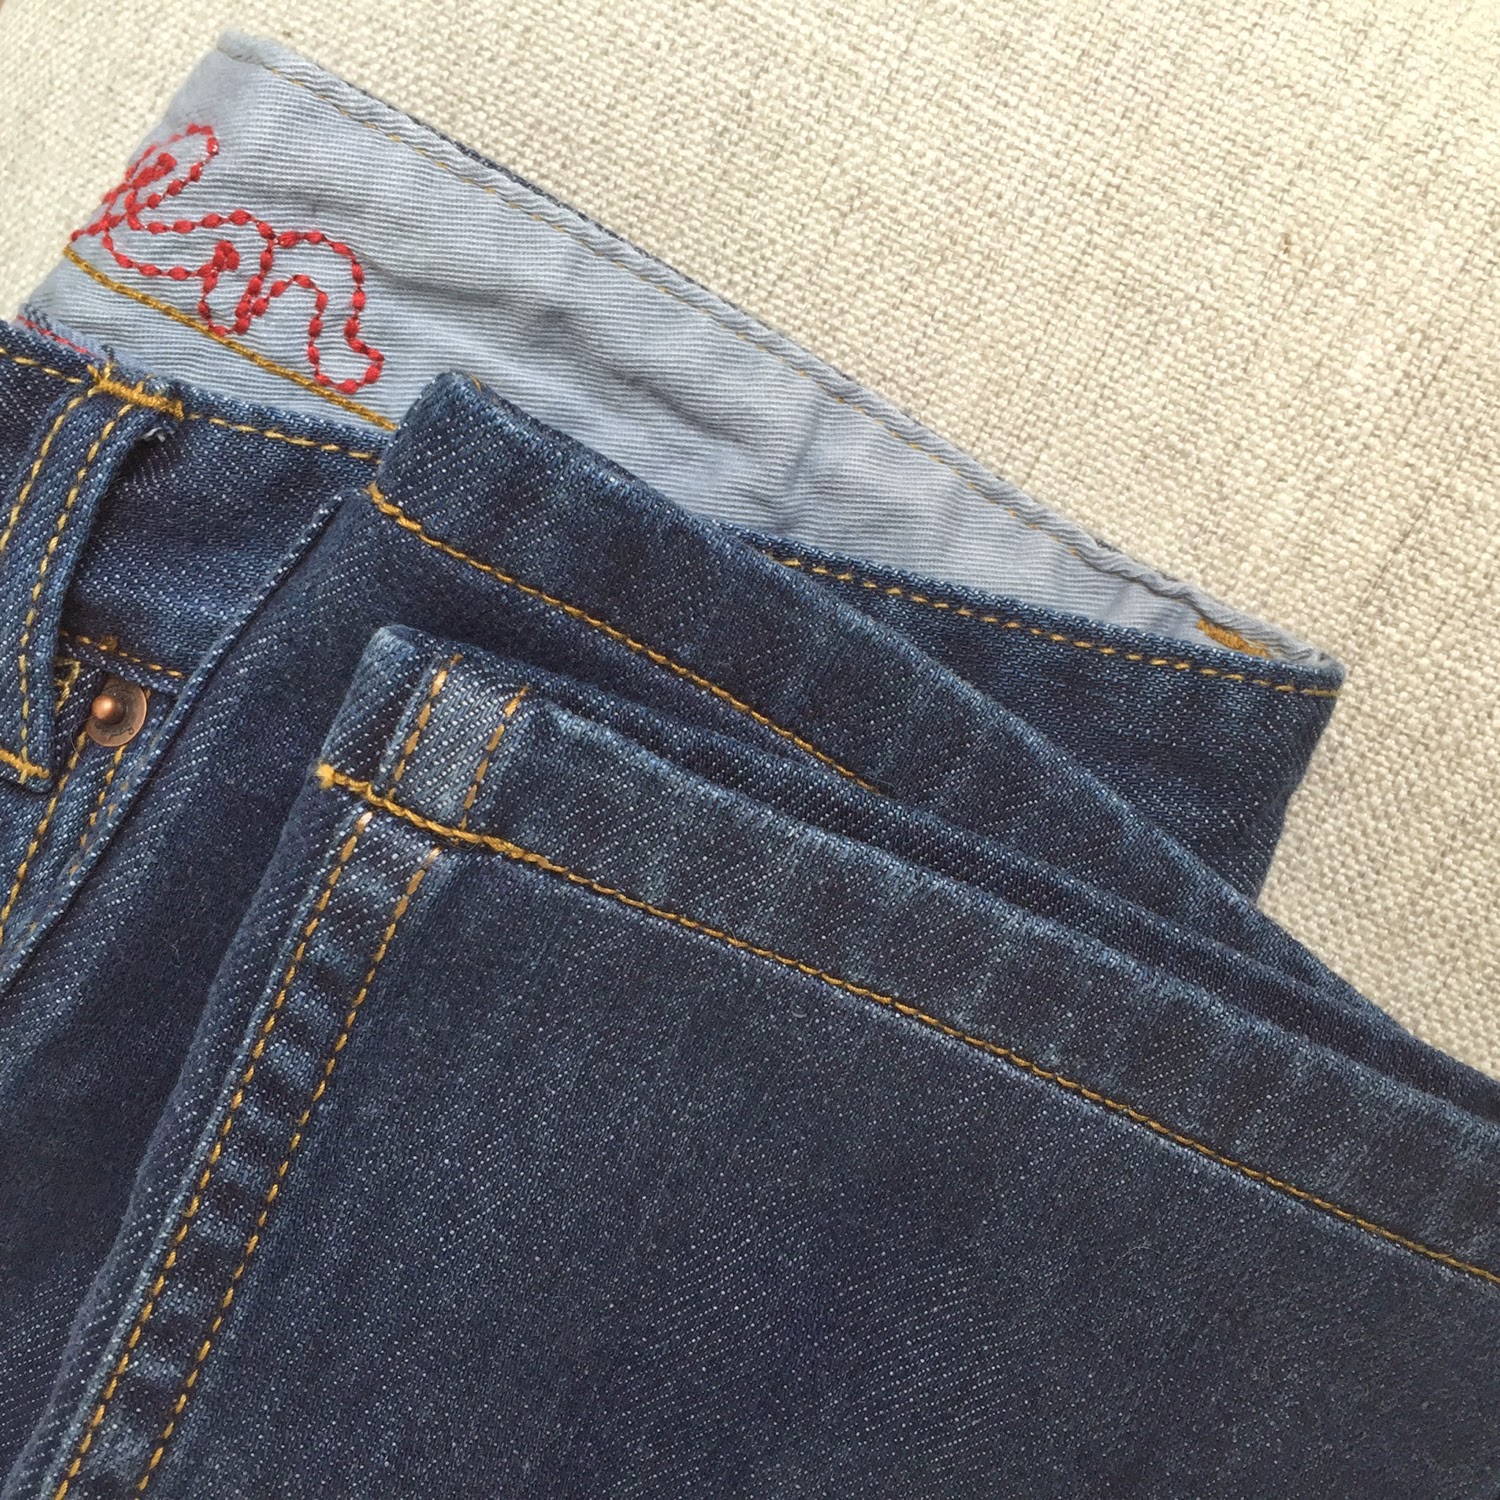 Flossie Teacakes: A sneaky way to shorten jeans